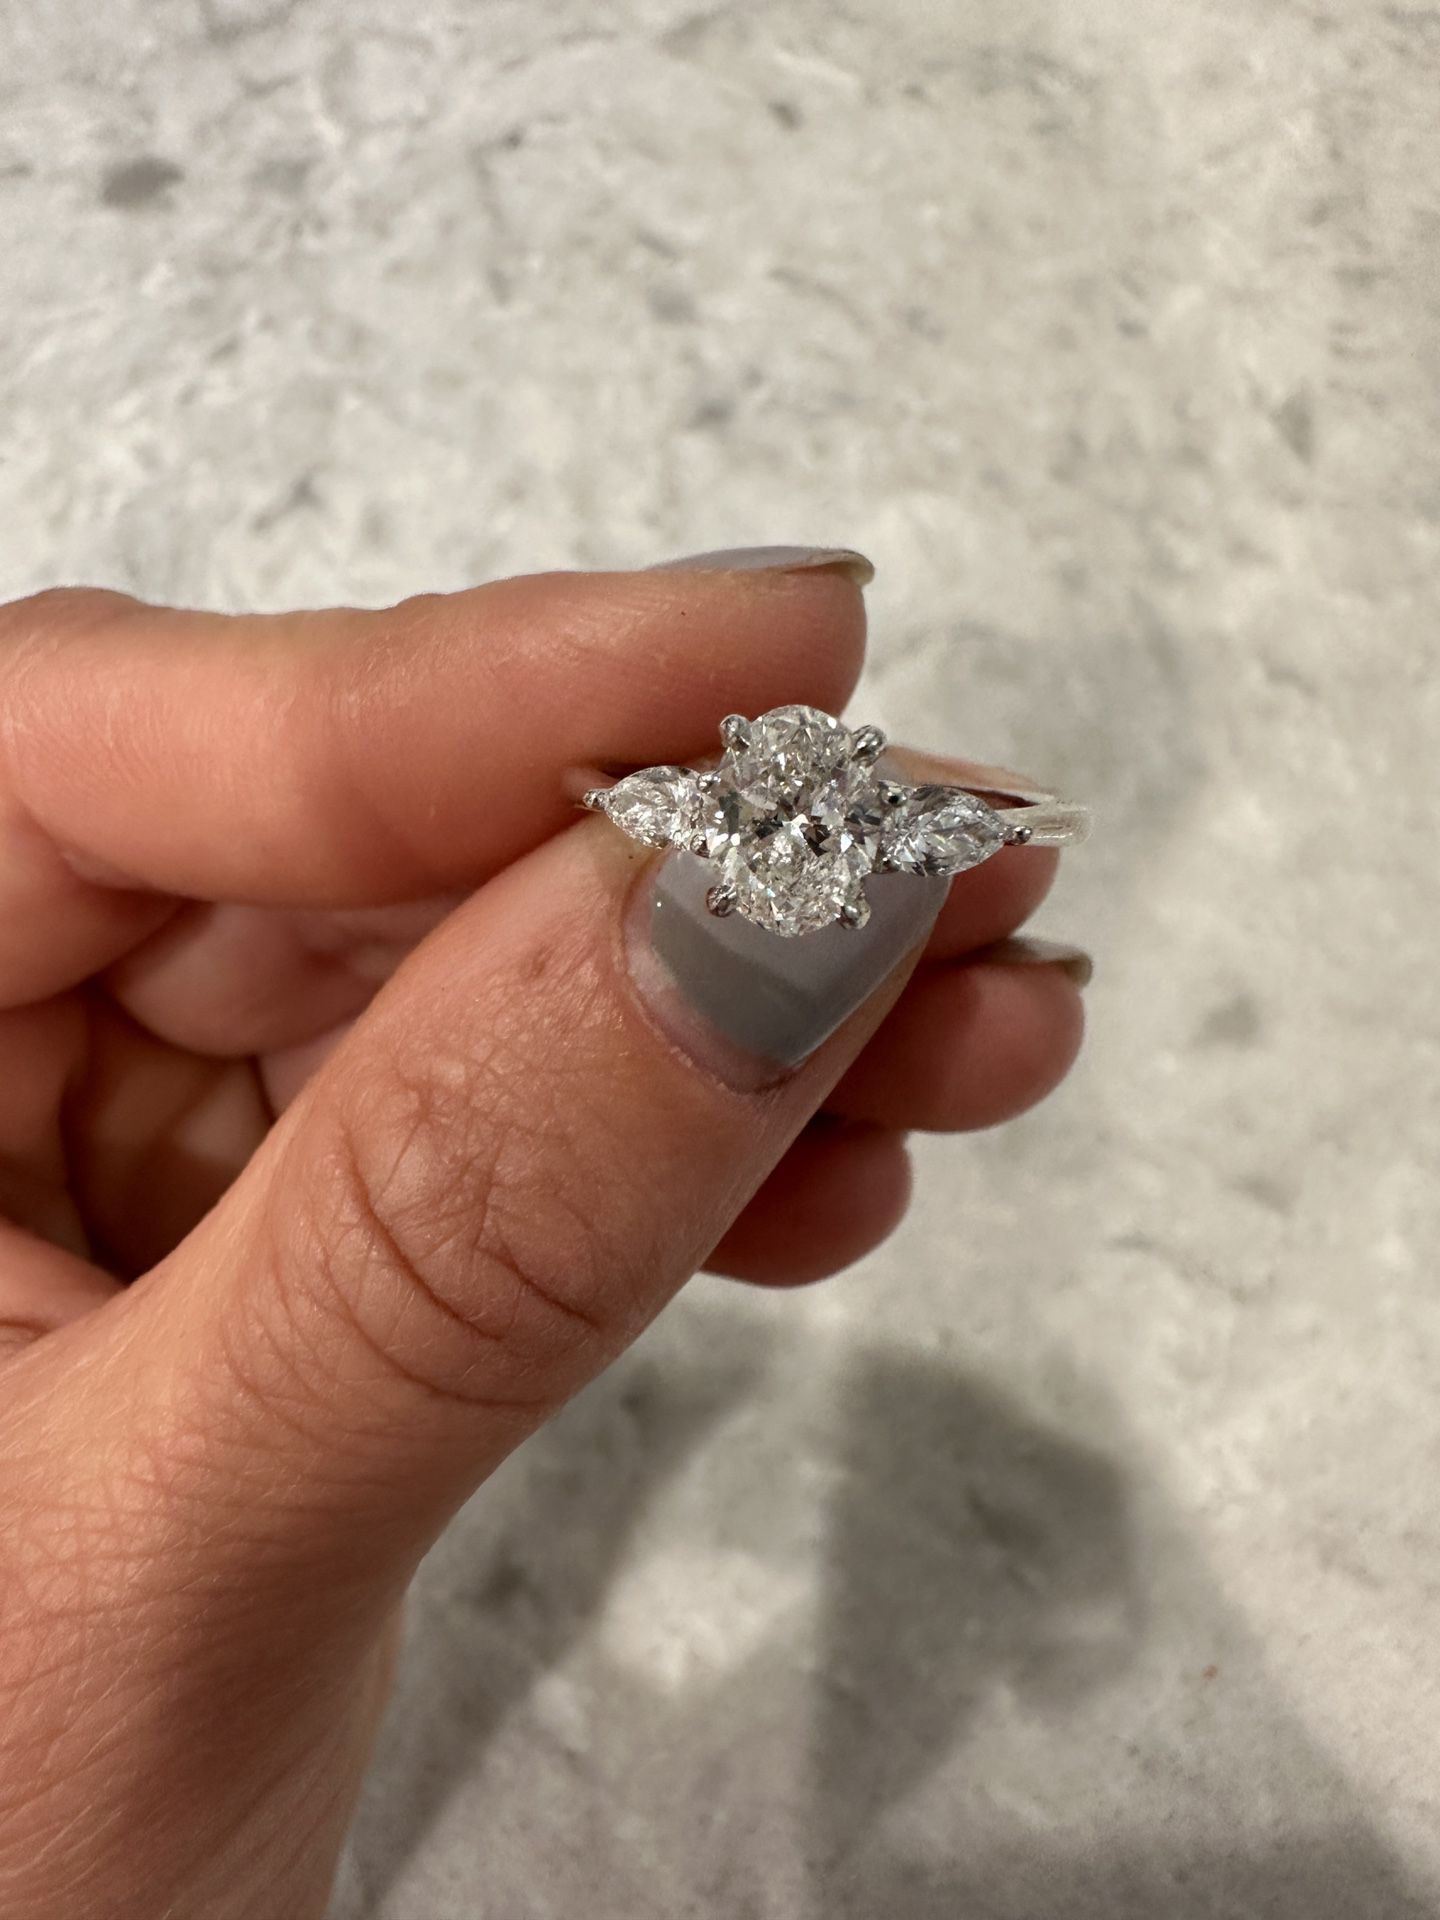 18k White Gold Diamond Engagement Ring - Oval